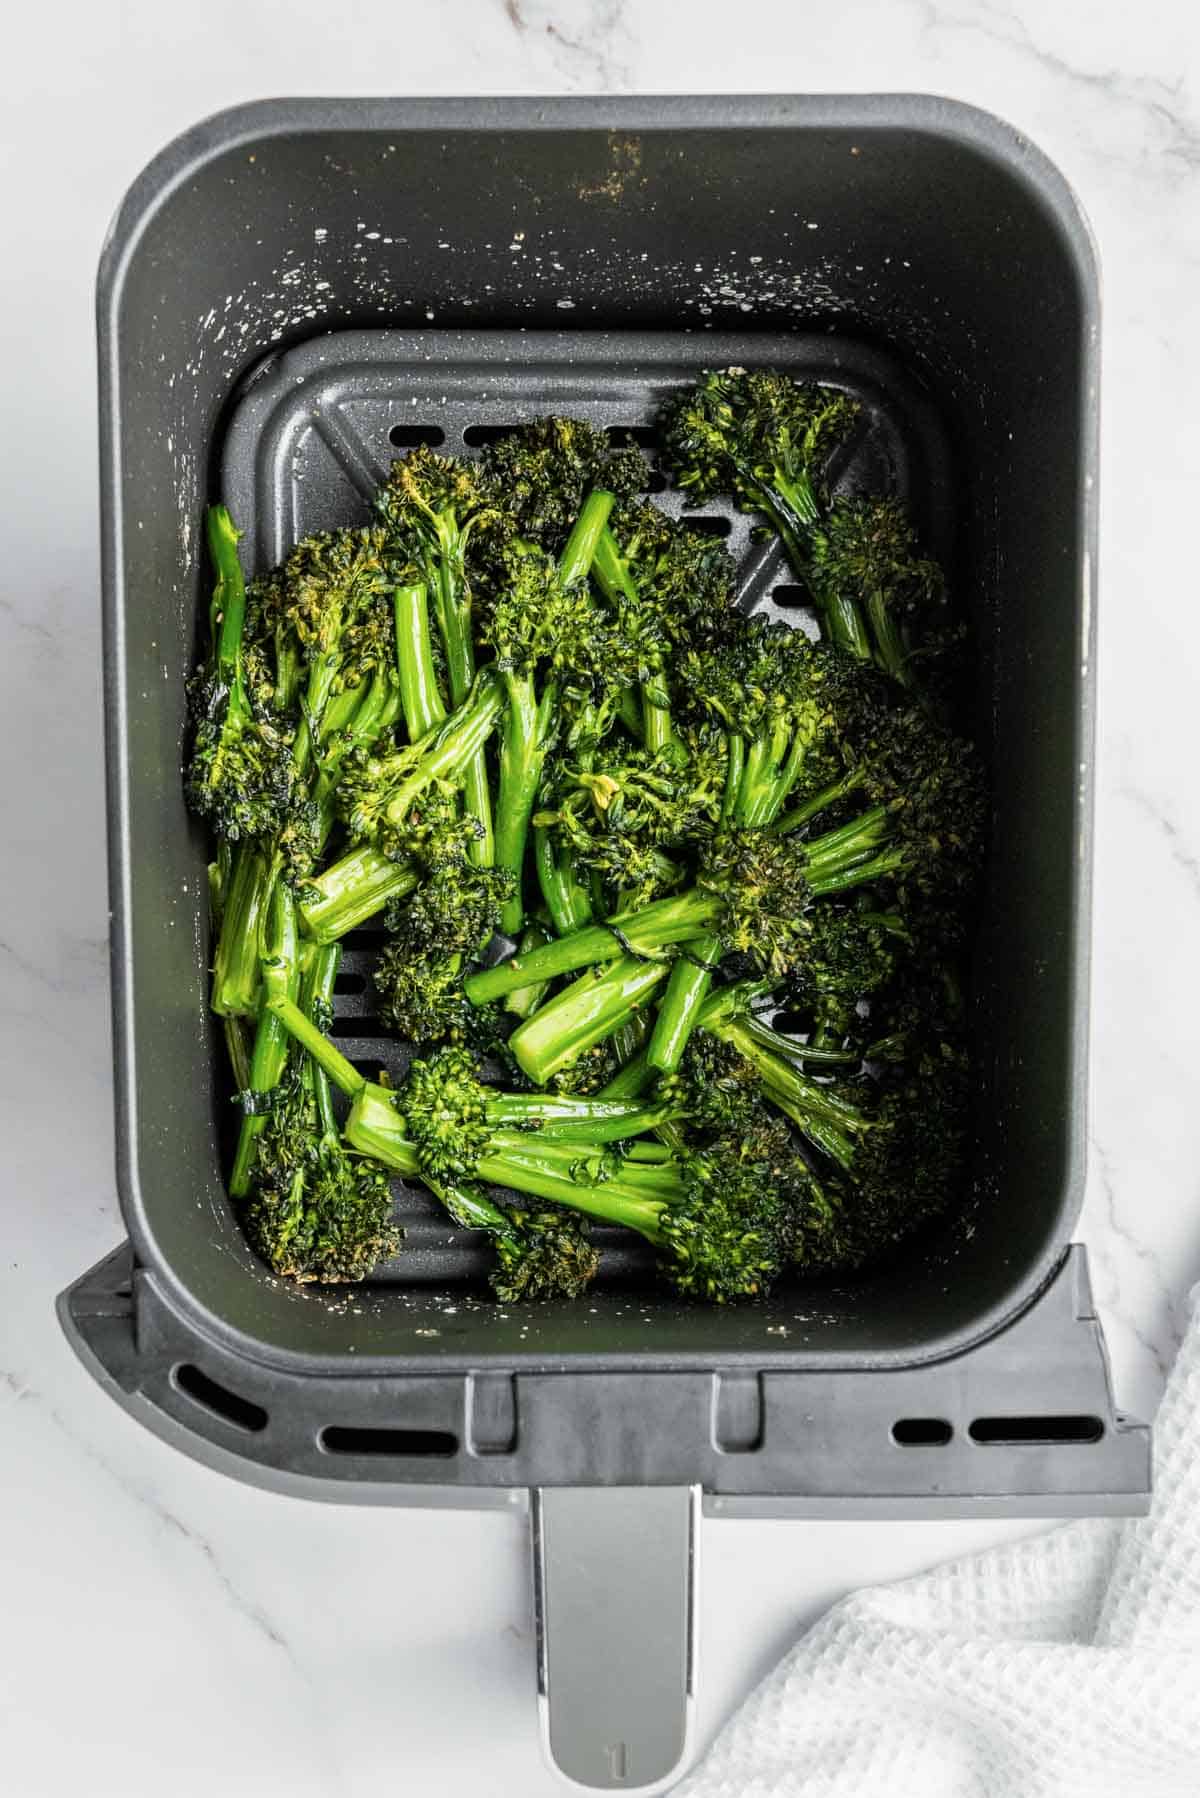 Tender broccolini inside an air fryer basket.